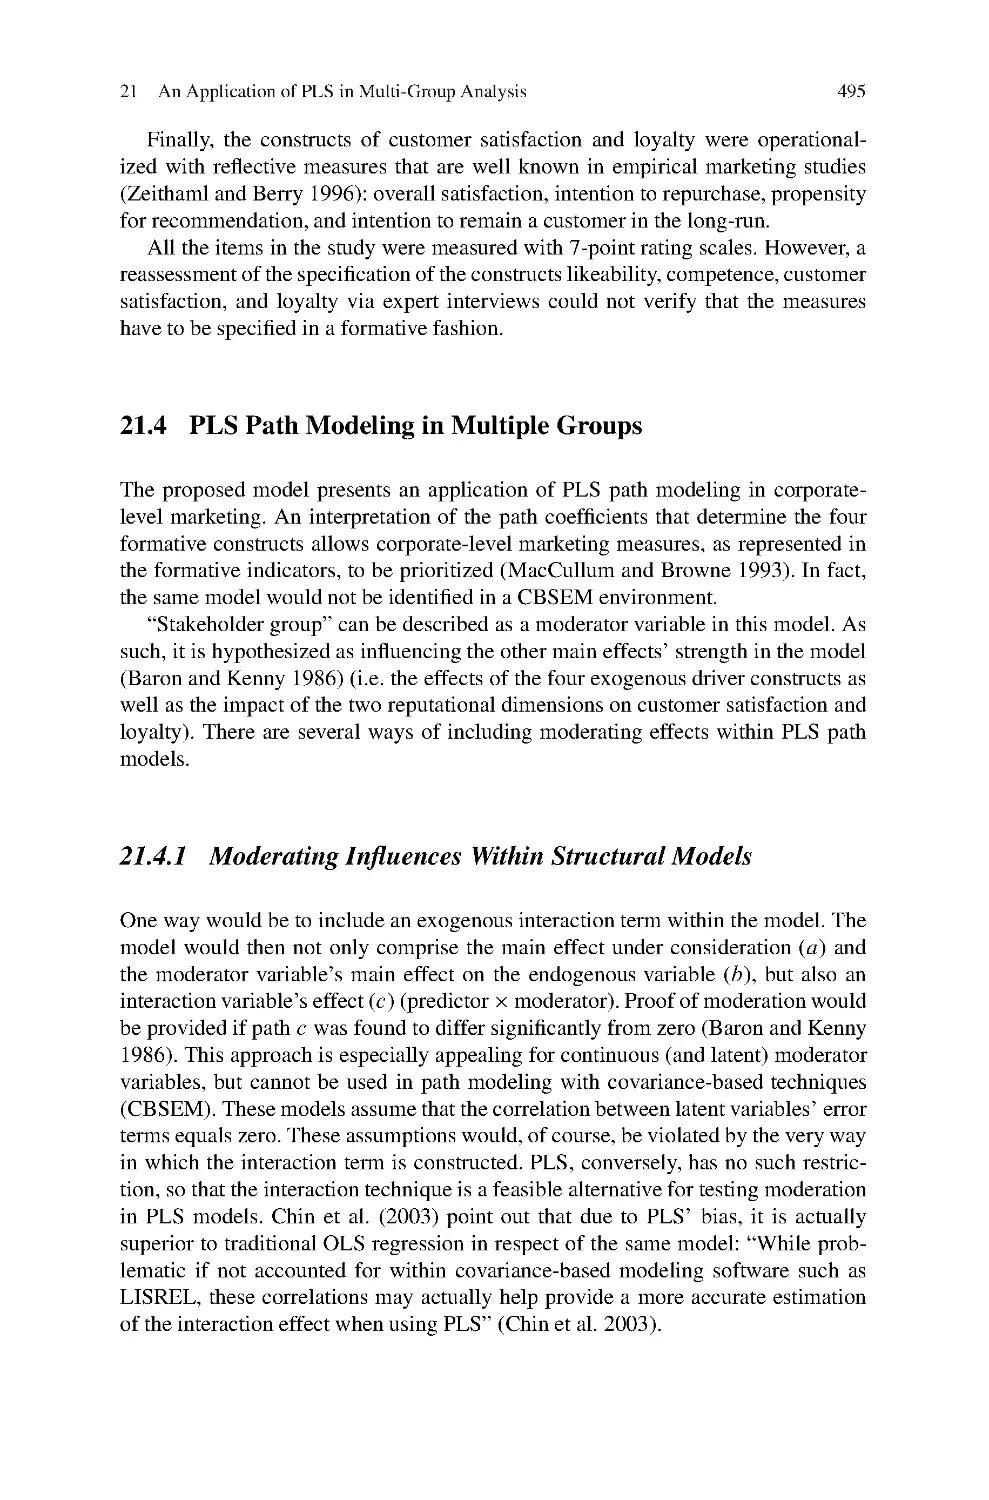 21.4 PLS Path Modeling in Multiple Groups